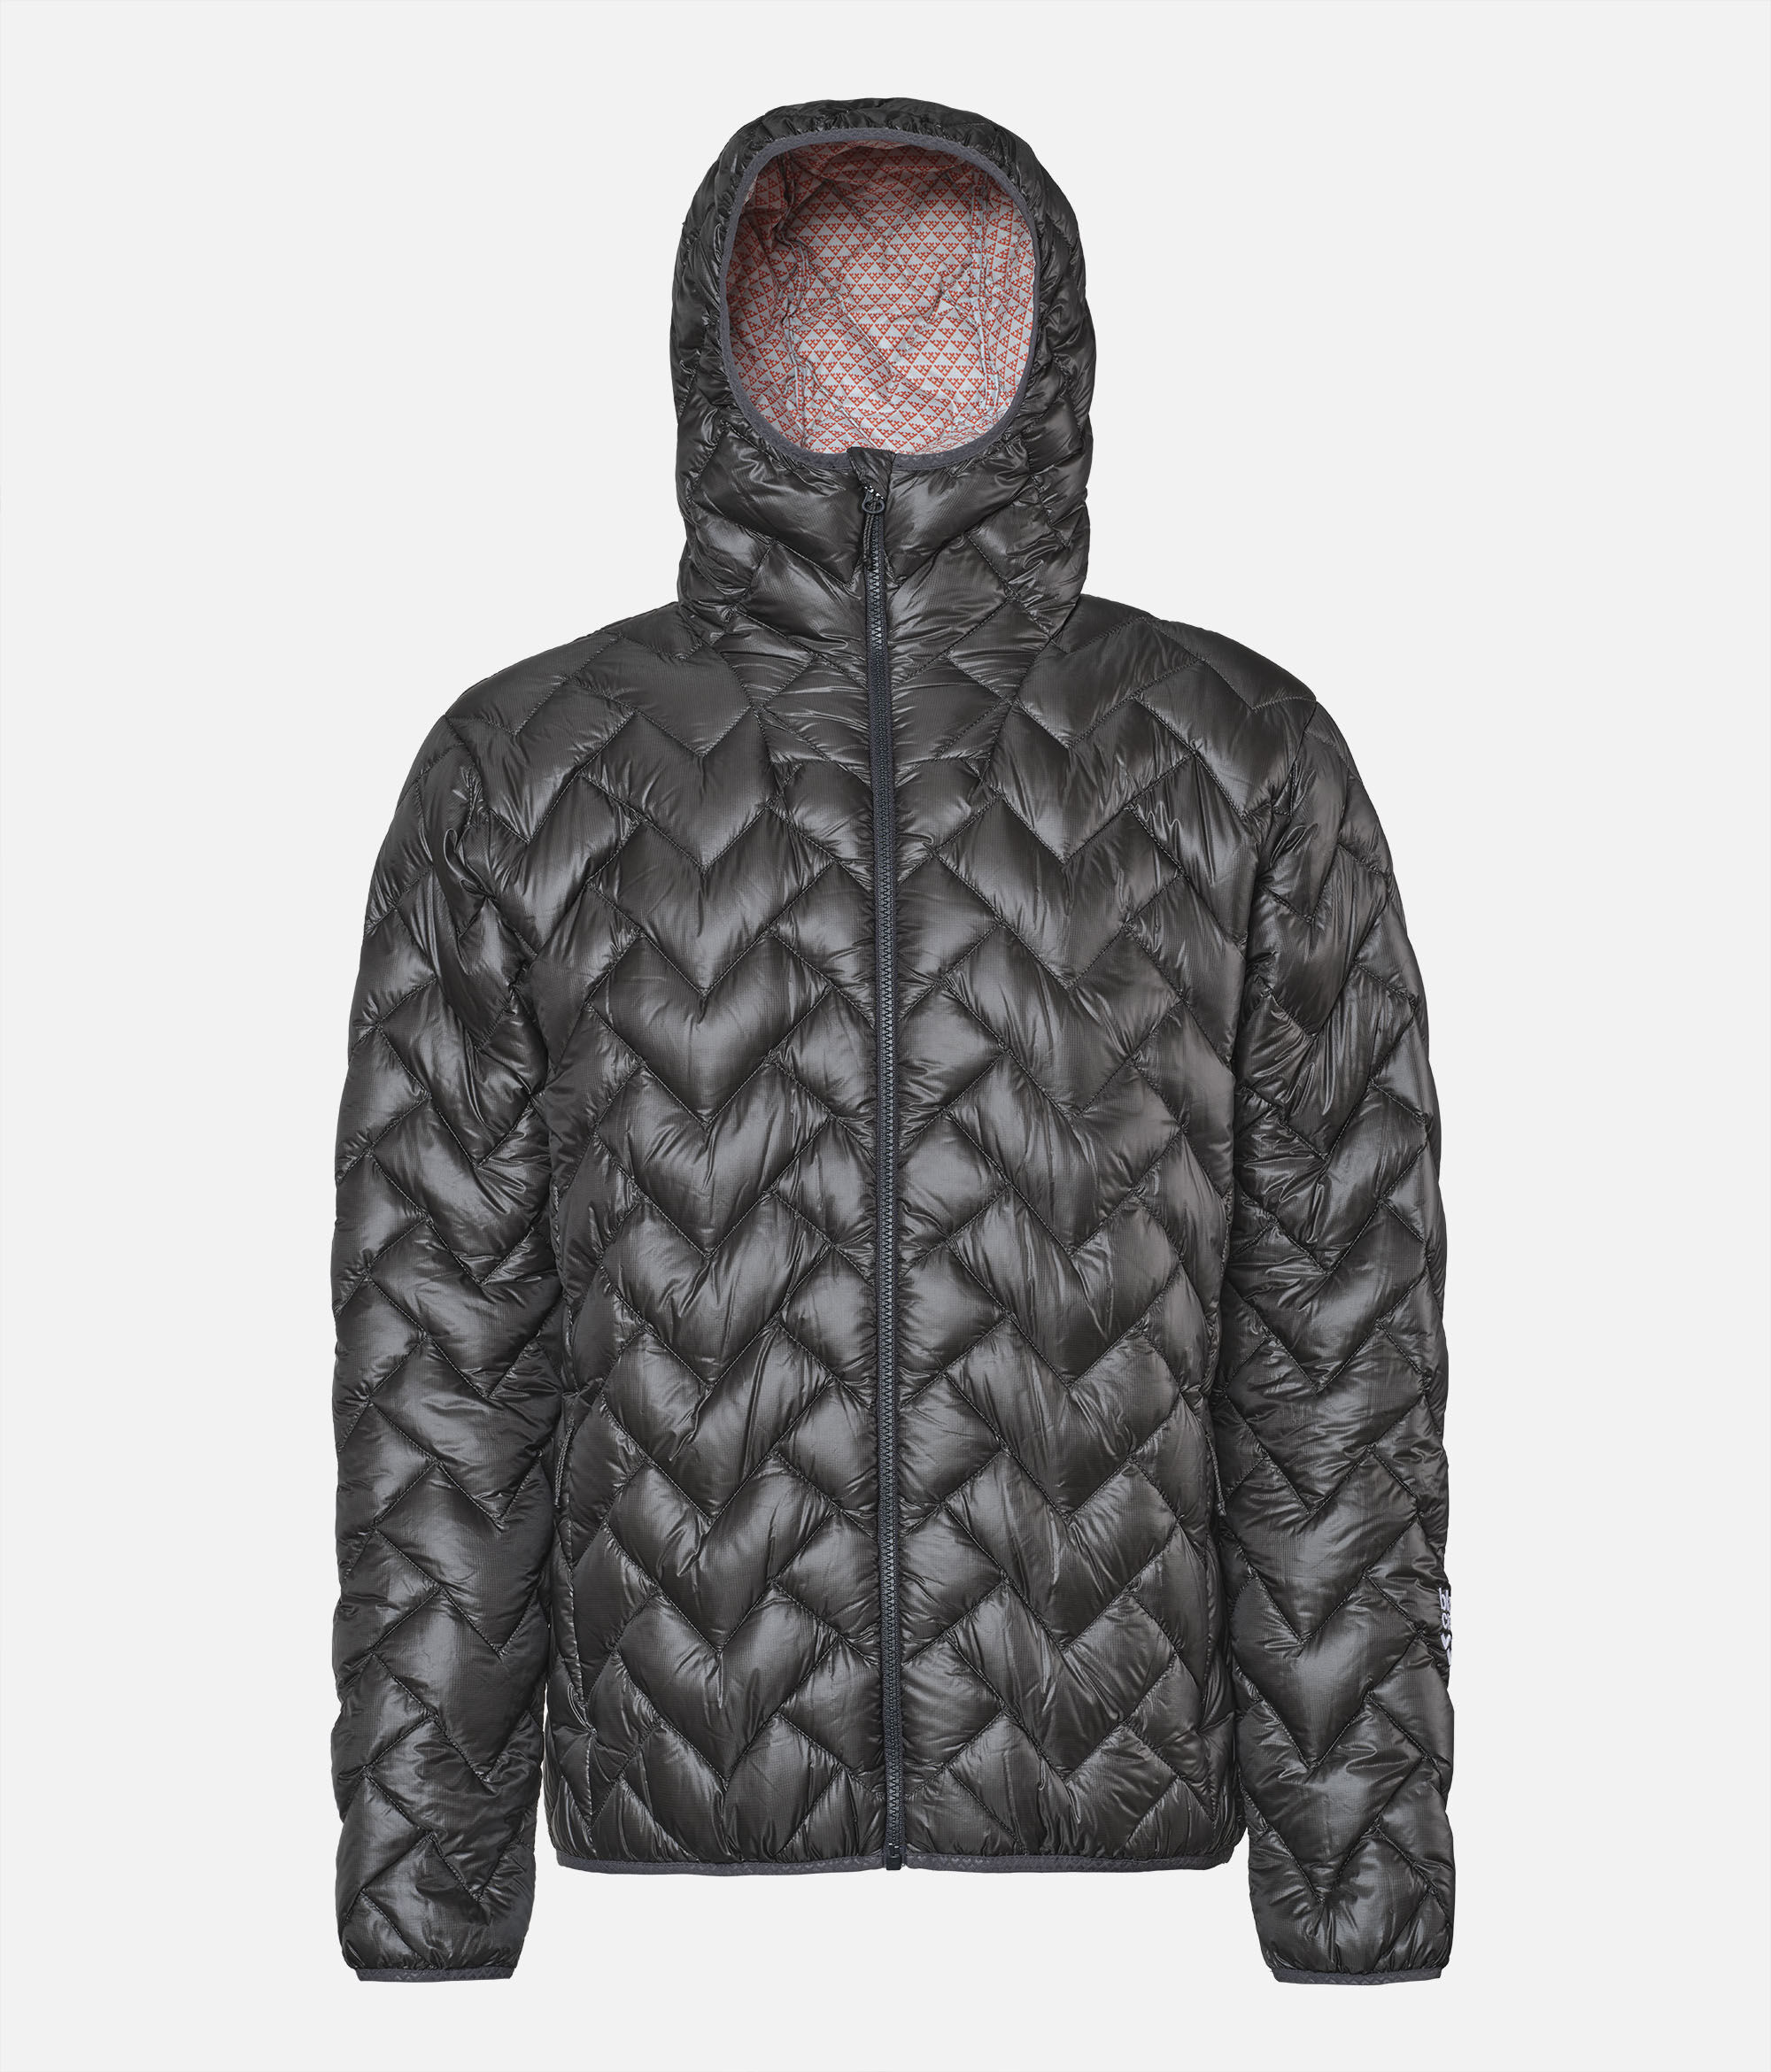 Buy Bespoke Design Duck Feather Men's Lightweight Water-Resistant Packable  Down Jacket Insulated Coat at Amazon.in